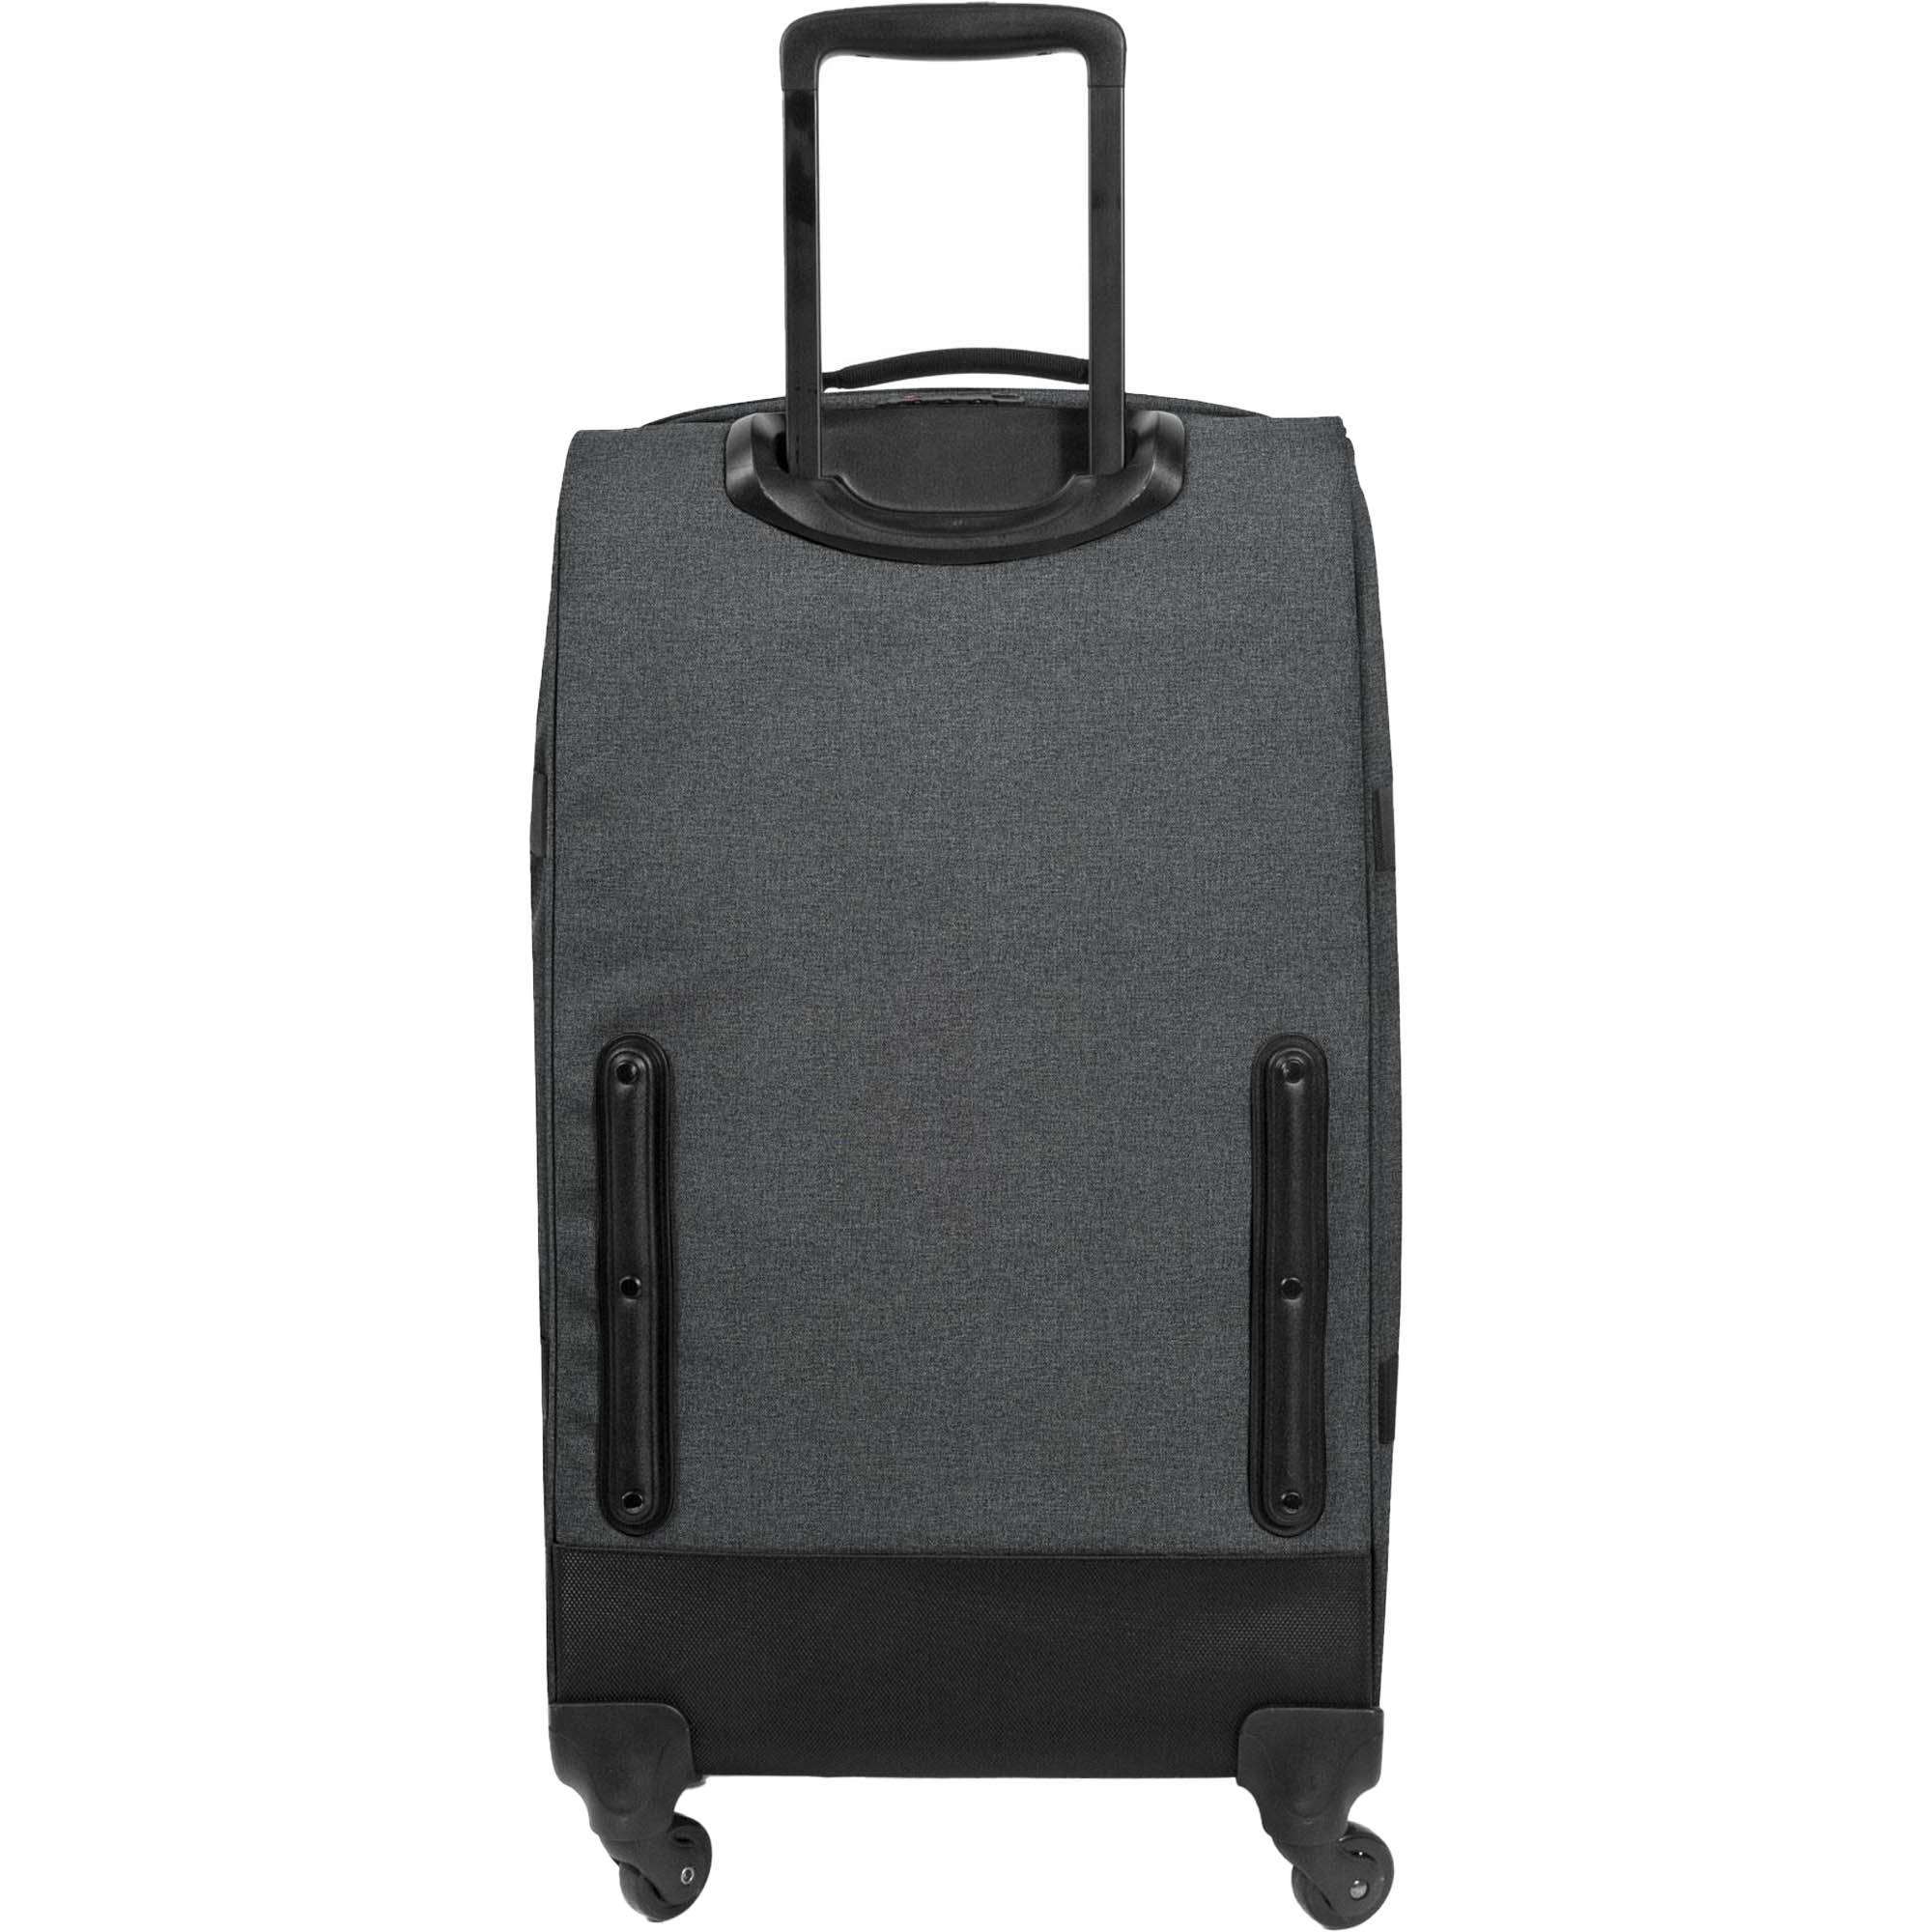 Eastpak Trans4 M 68 Litres Wheeled Luggage